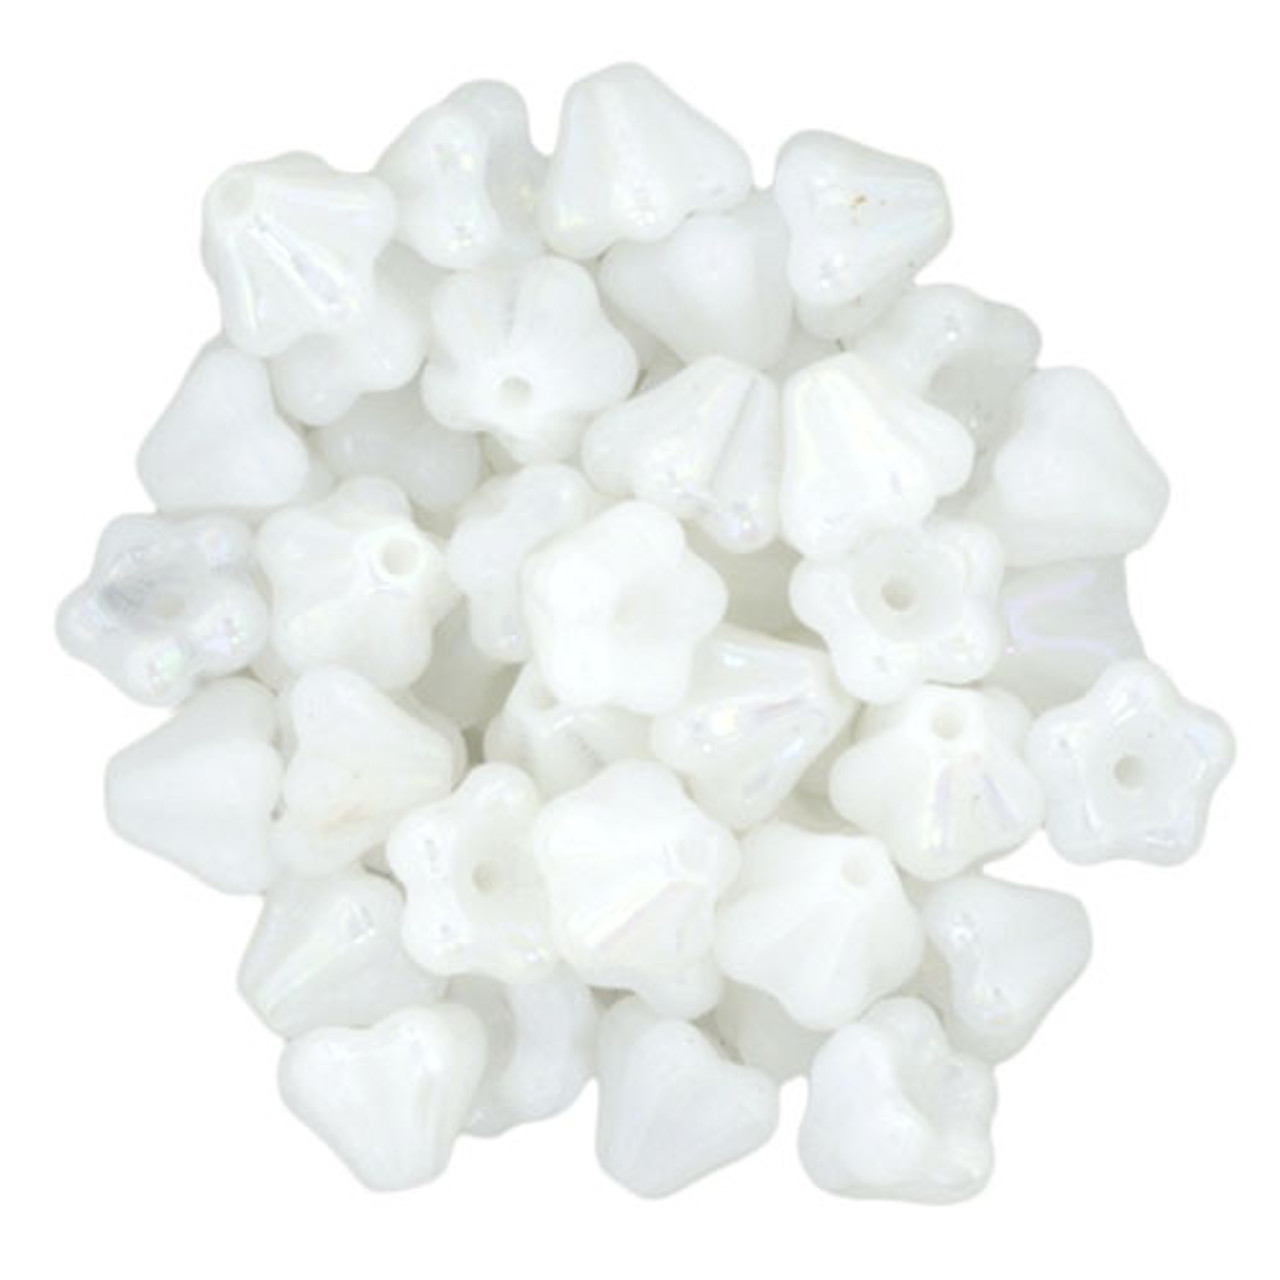 Konos Par Puca®, Czech glass bead, Opaque White Ceramic Look, 10 grams